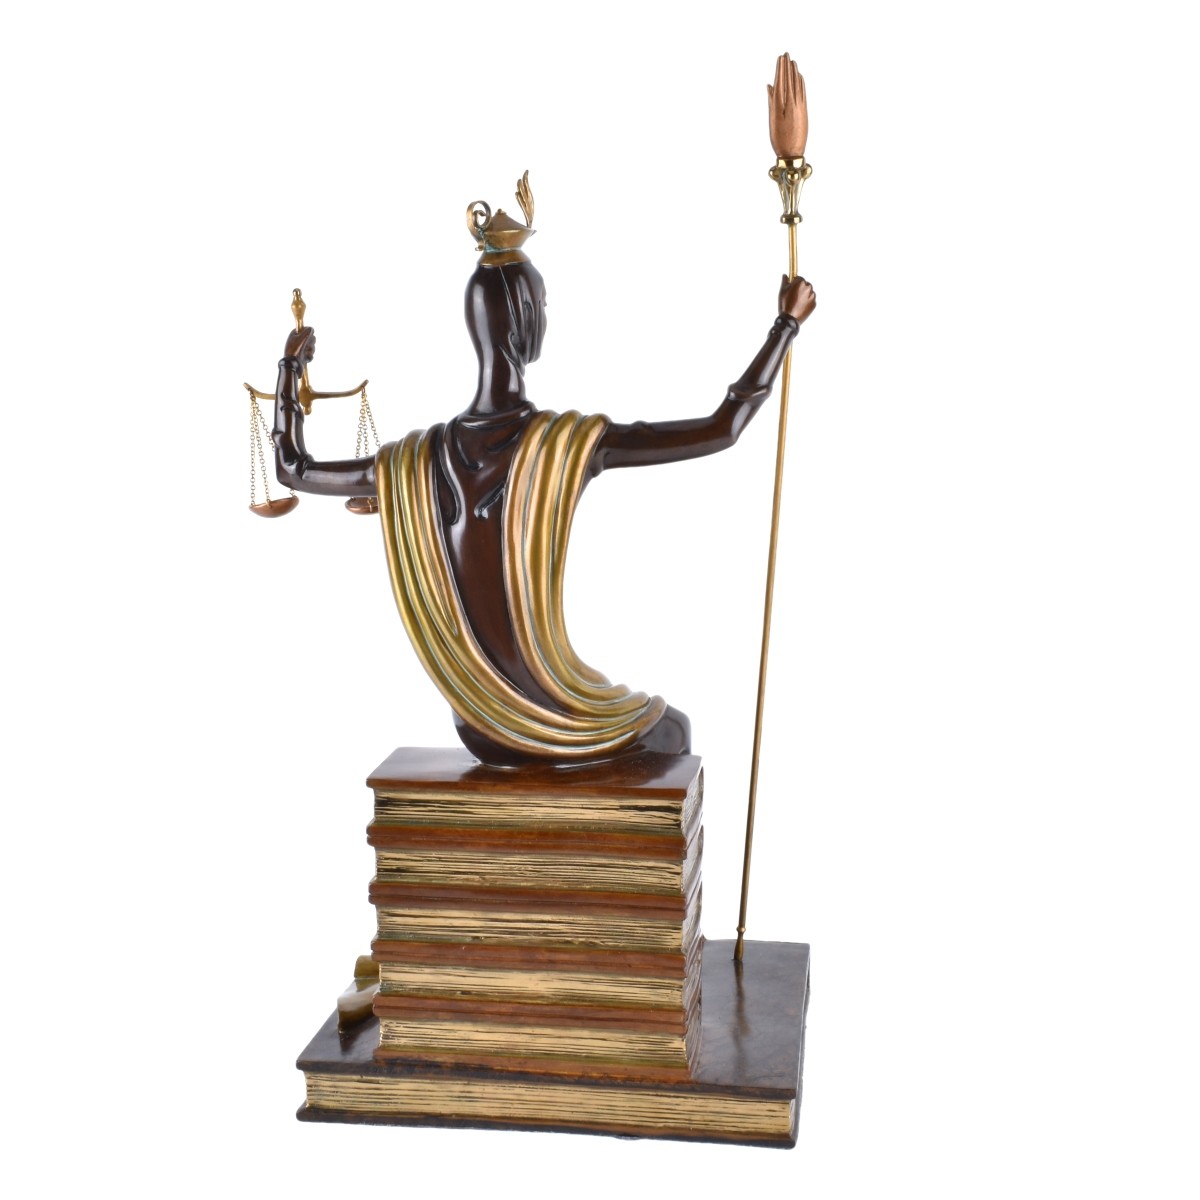 Erte (1892 - 1990) "Lady Justice" Bronze Sculpture